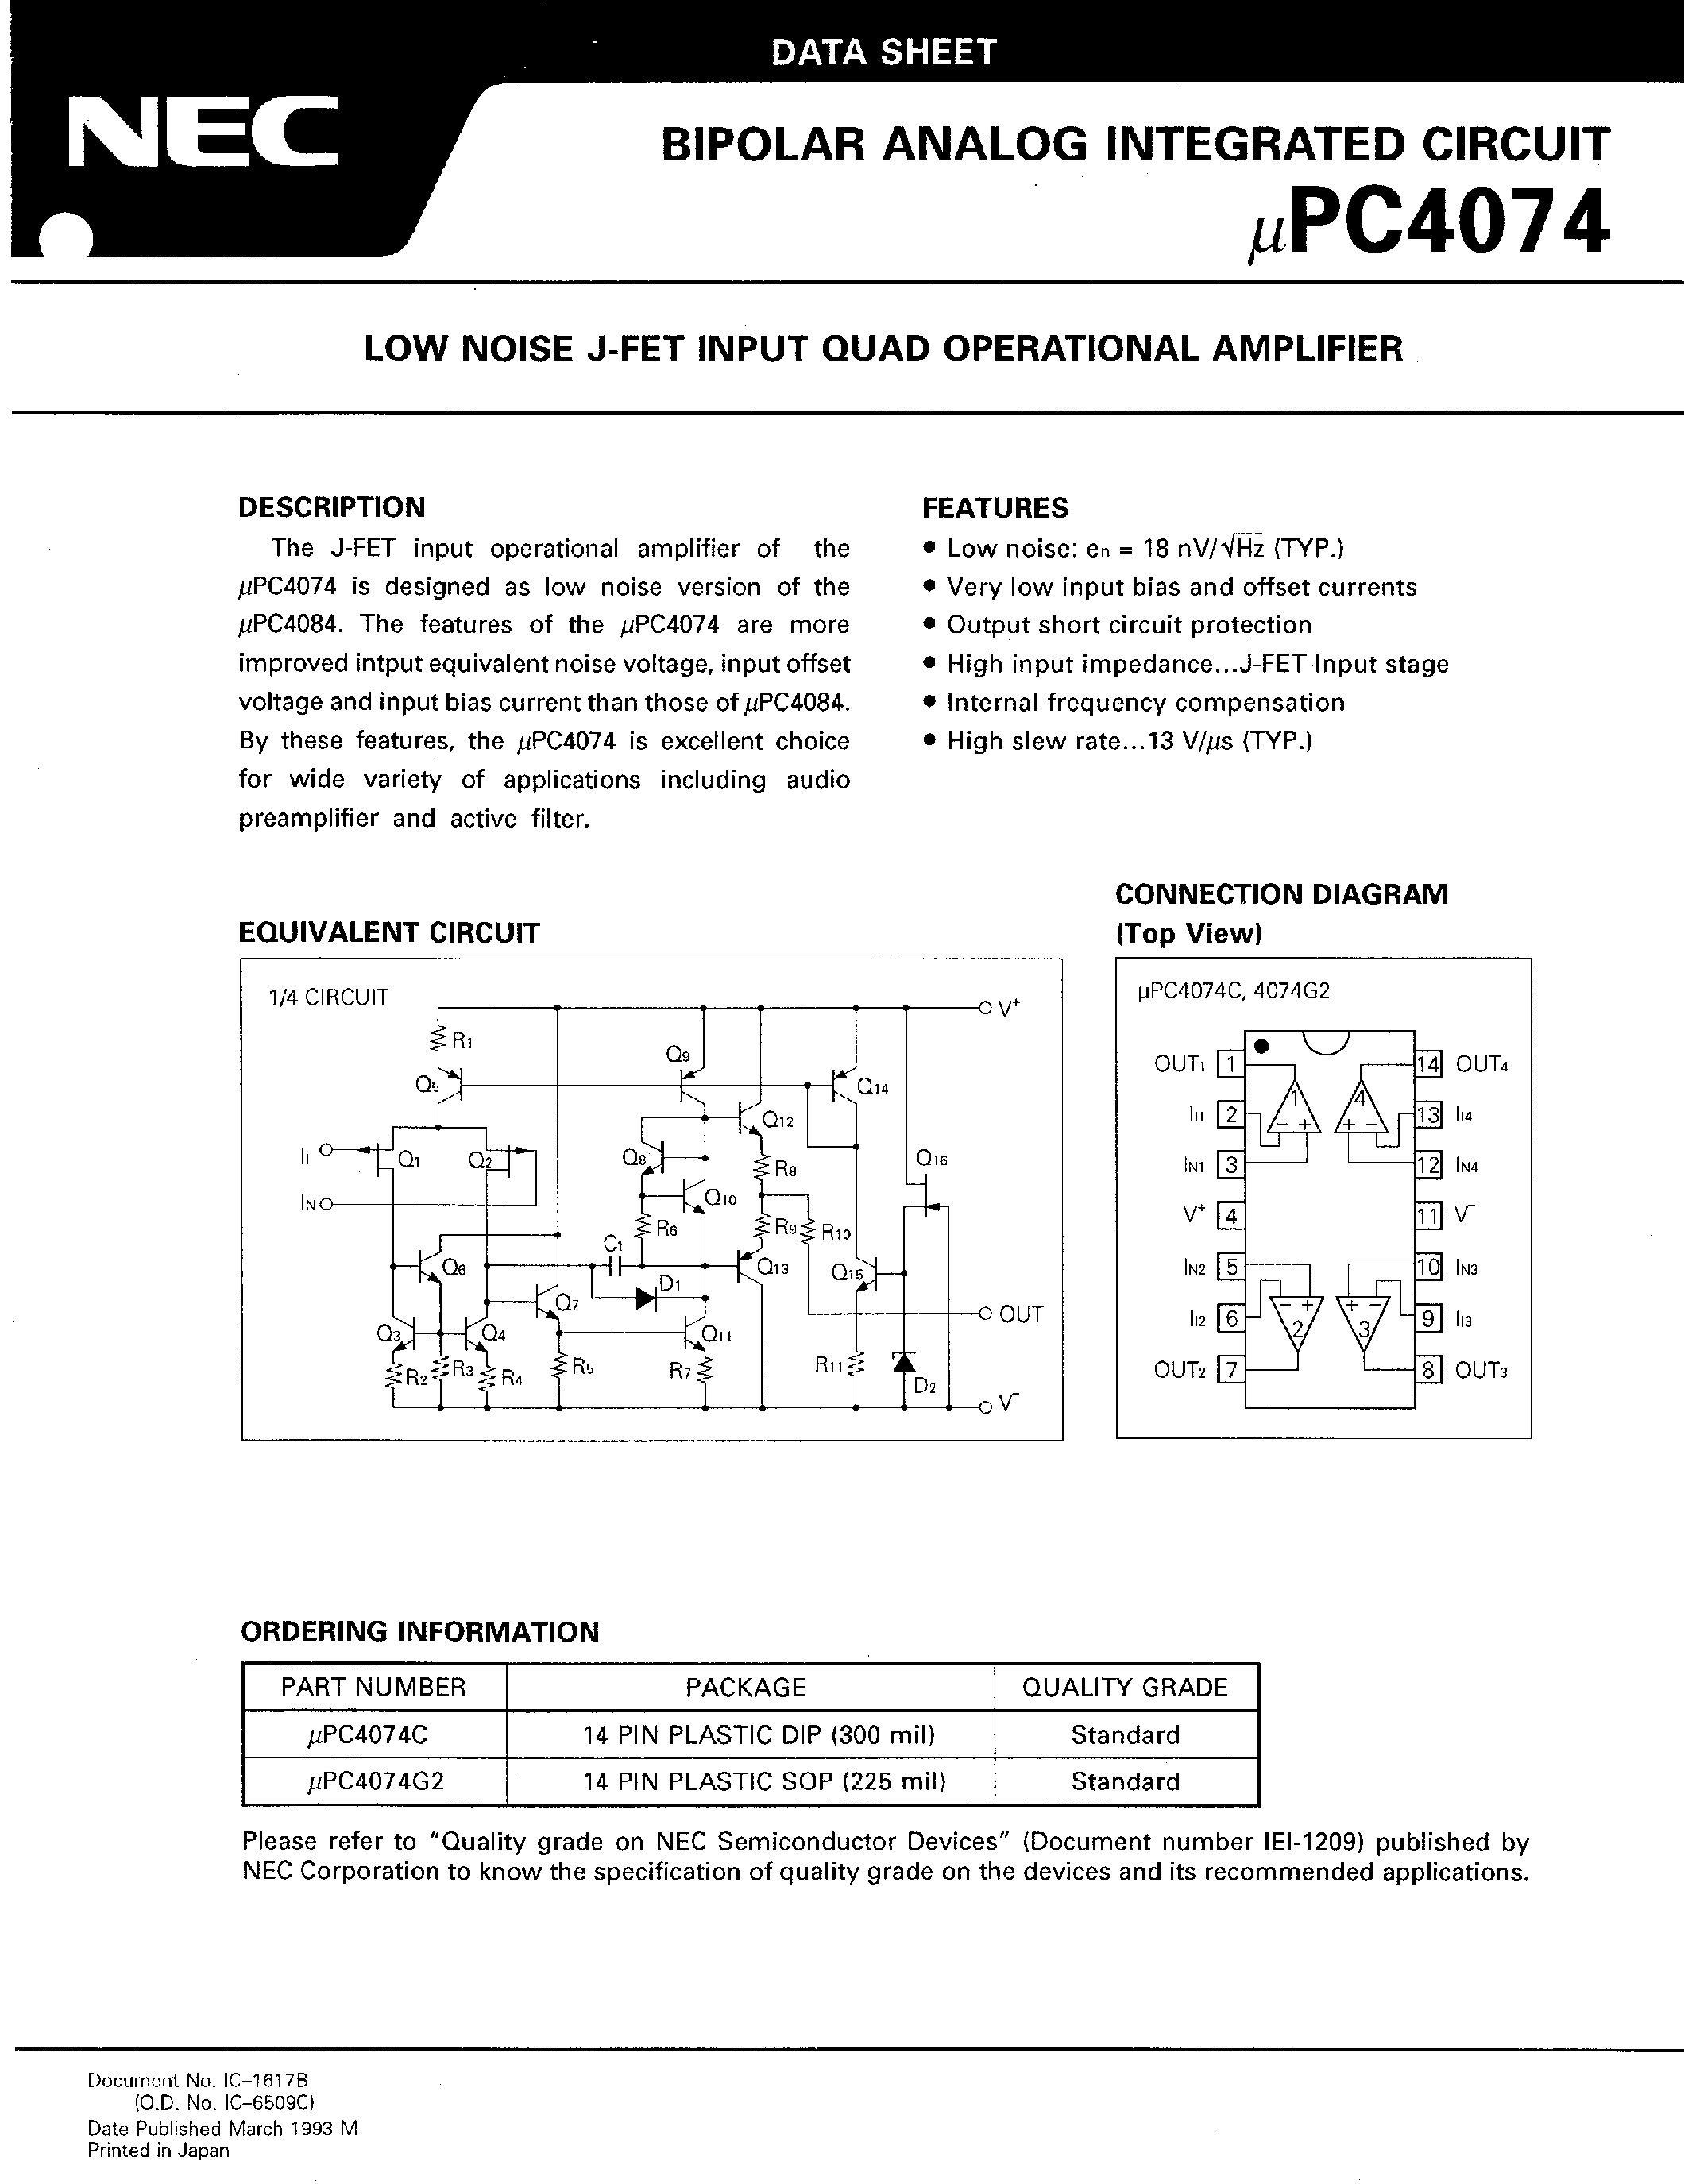 Datasheet UPC4074 - LOW NOISE J-FET INPUT QUAD OPERATIONAL AMPLIFIER page 1